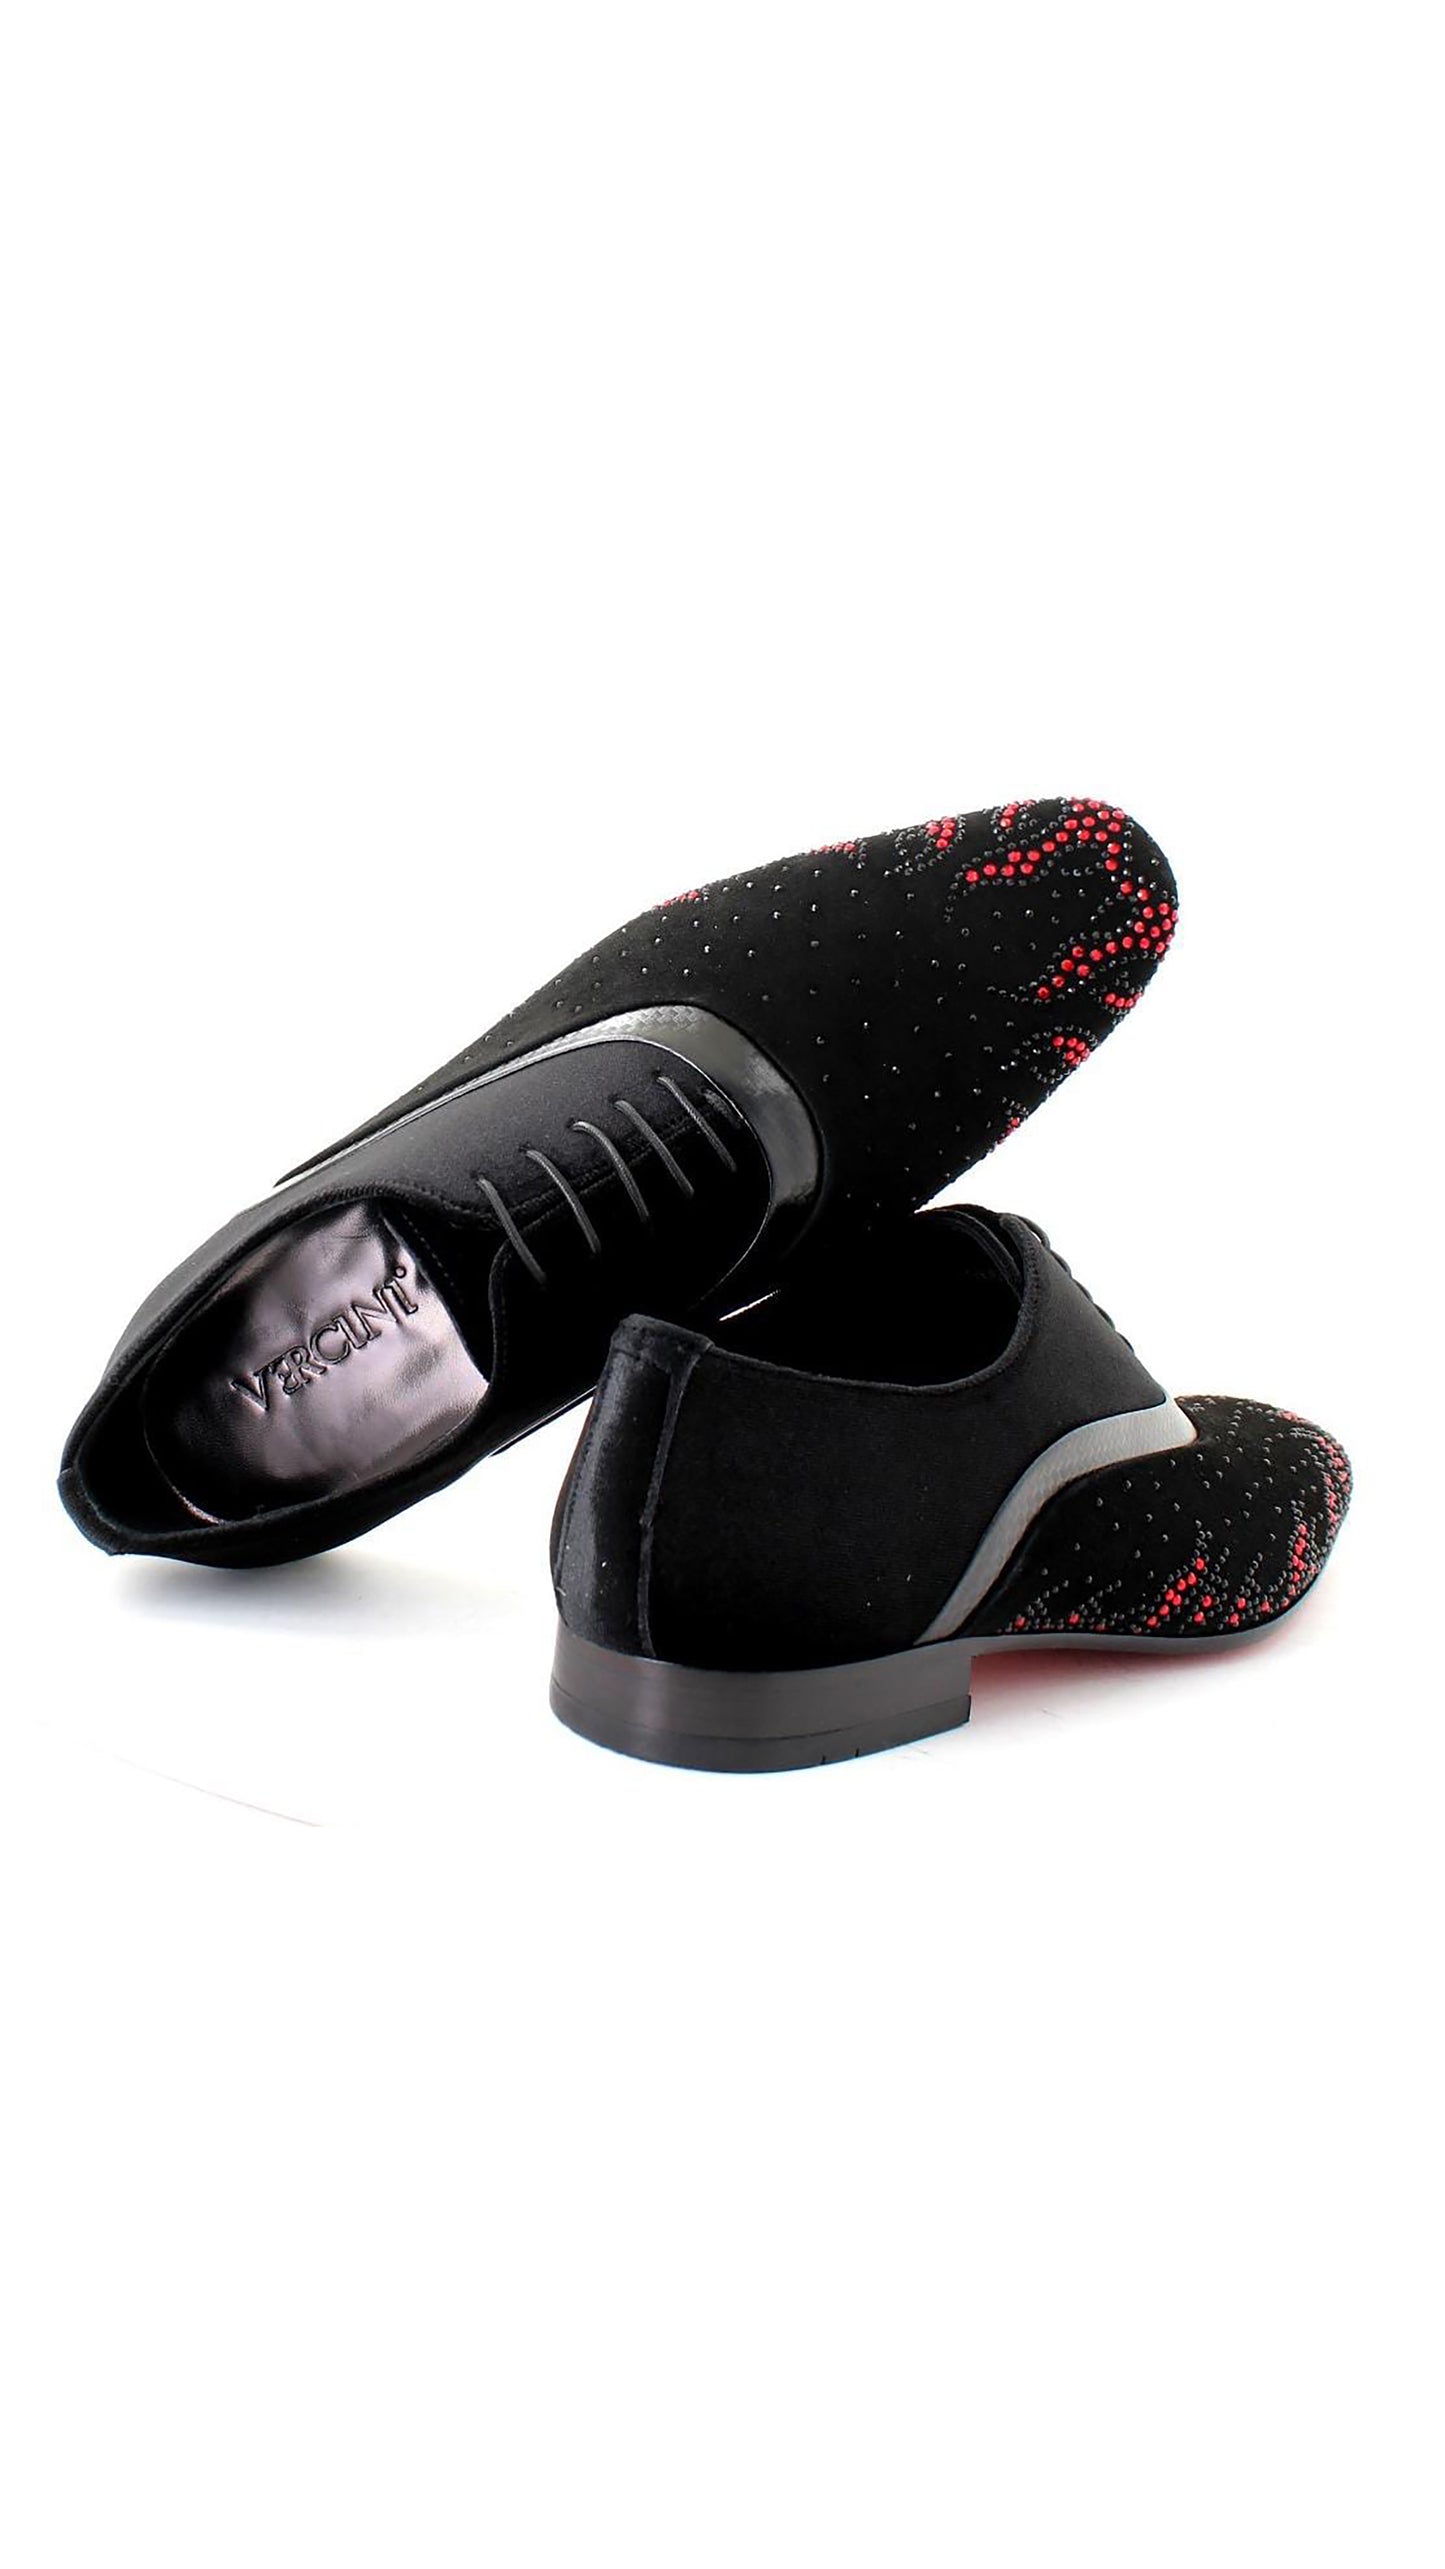 Vercini Cosmic Glint Oxfords Men's Designer Shoes SHOES Shoe Collection Vercini